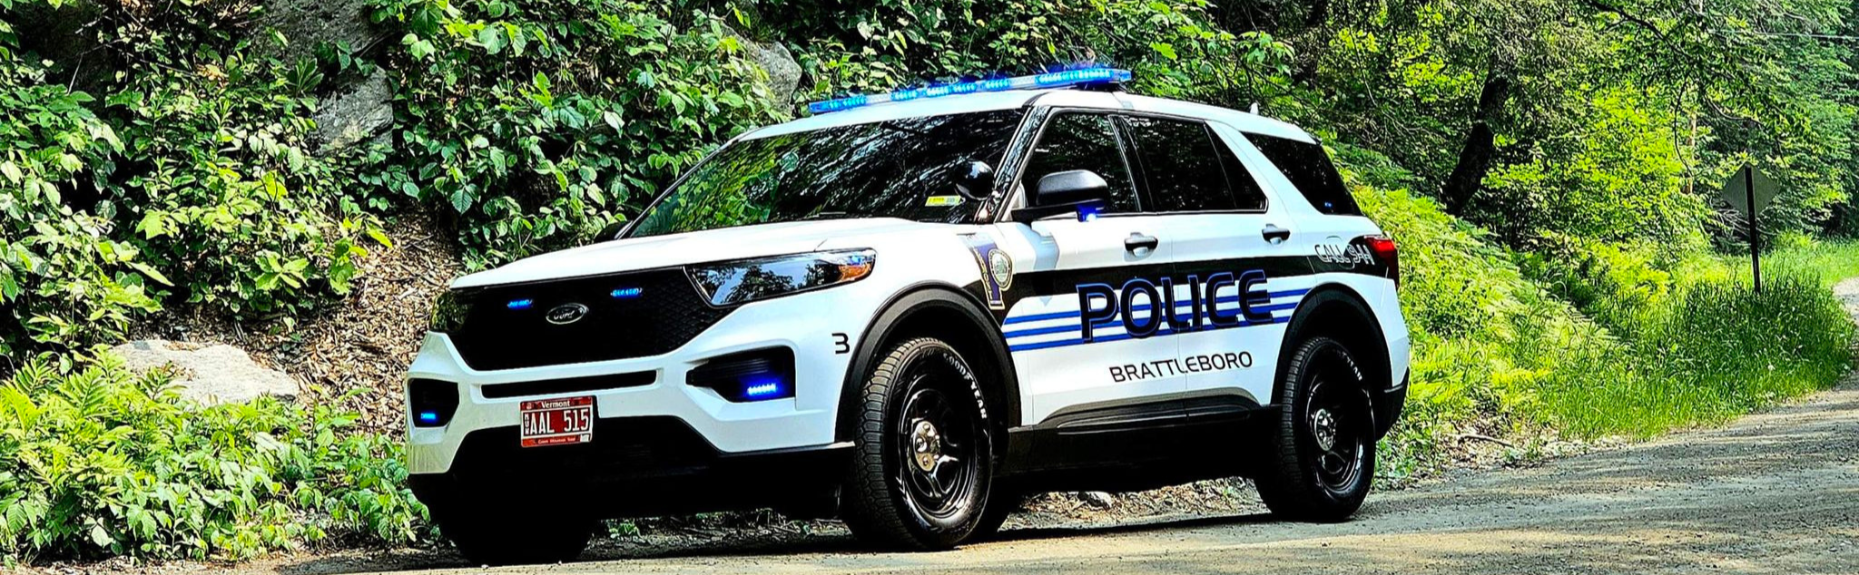 Brattleboro Police Department